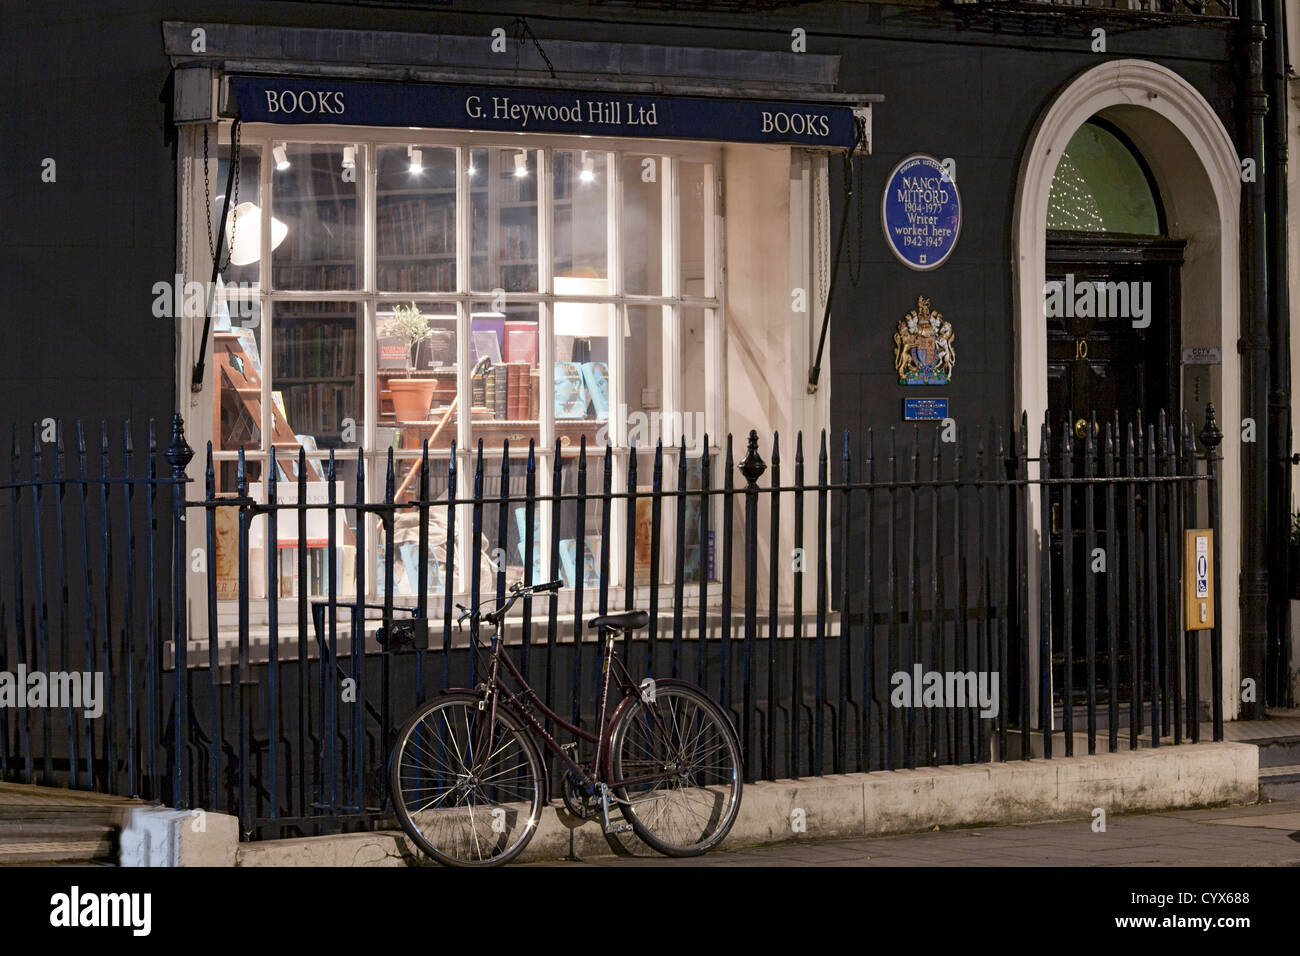 Heywood Hill antiquarian bookshop, 10 Curzon Steet, Mayfair, London, England, UK Stock Photo